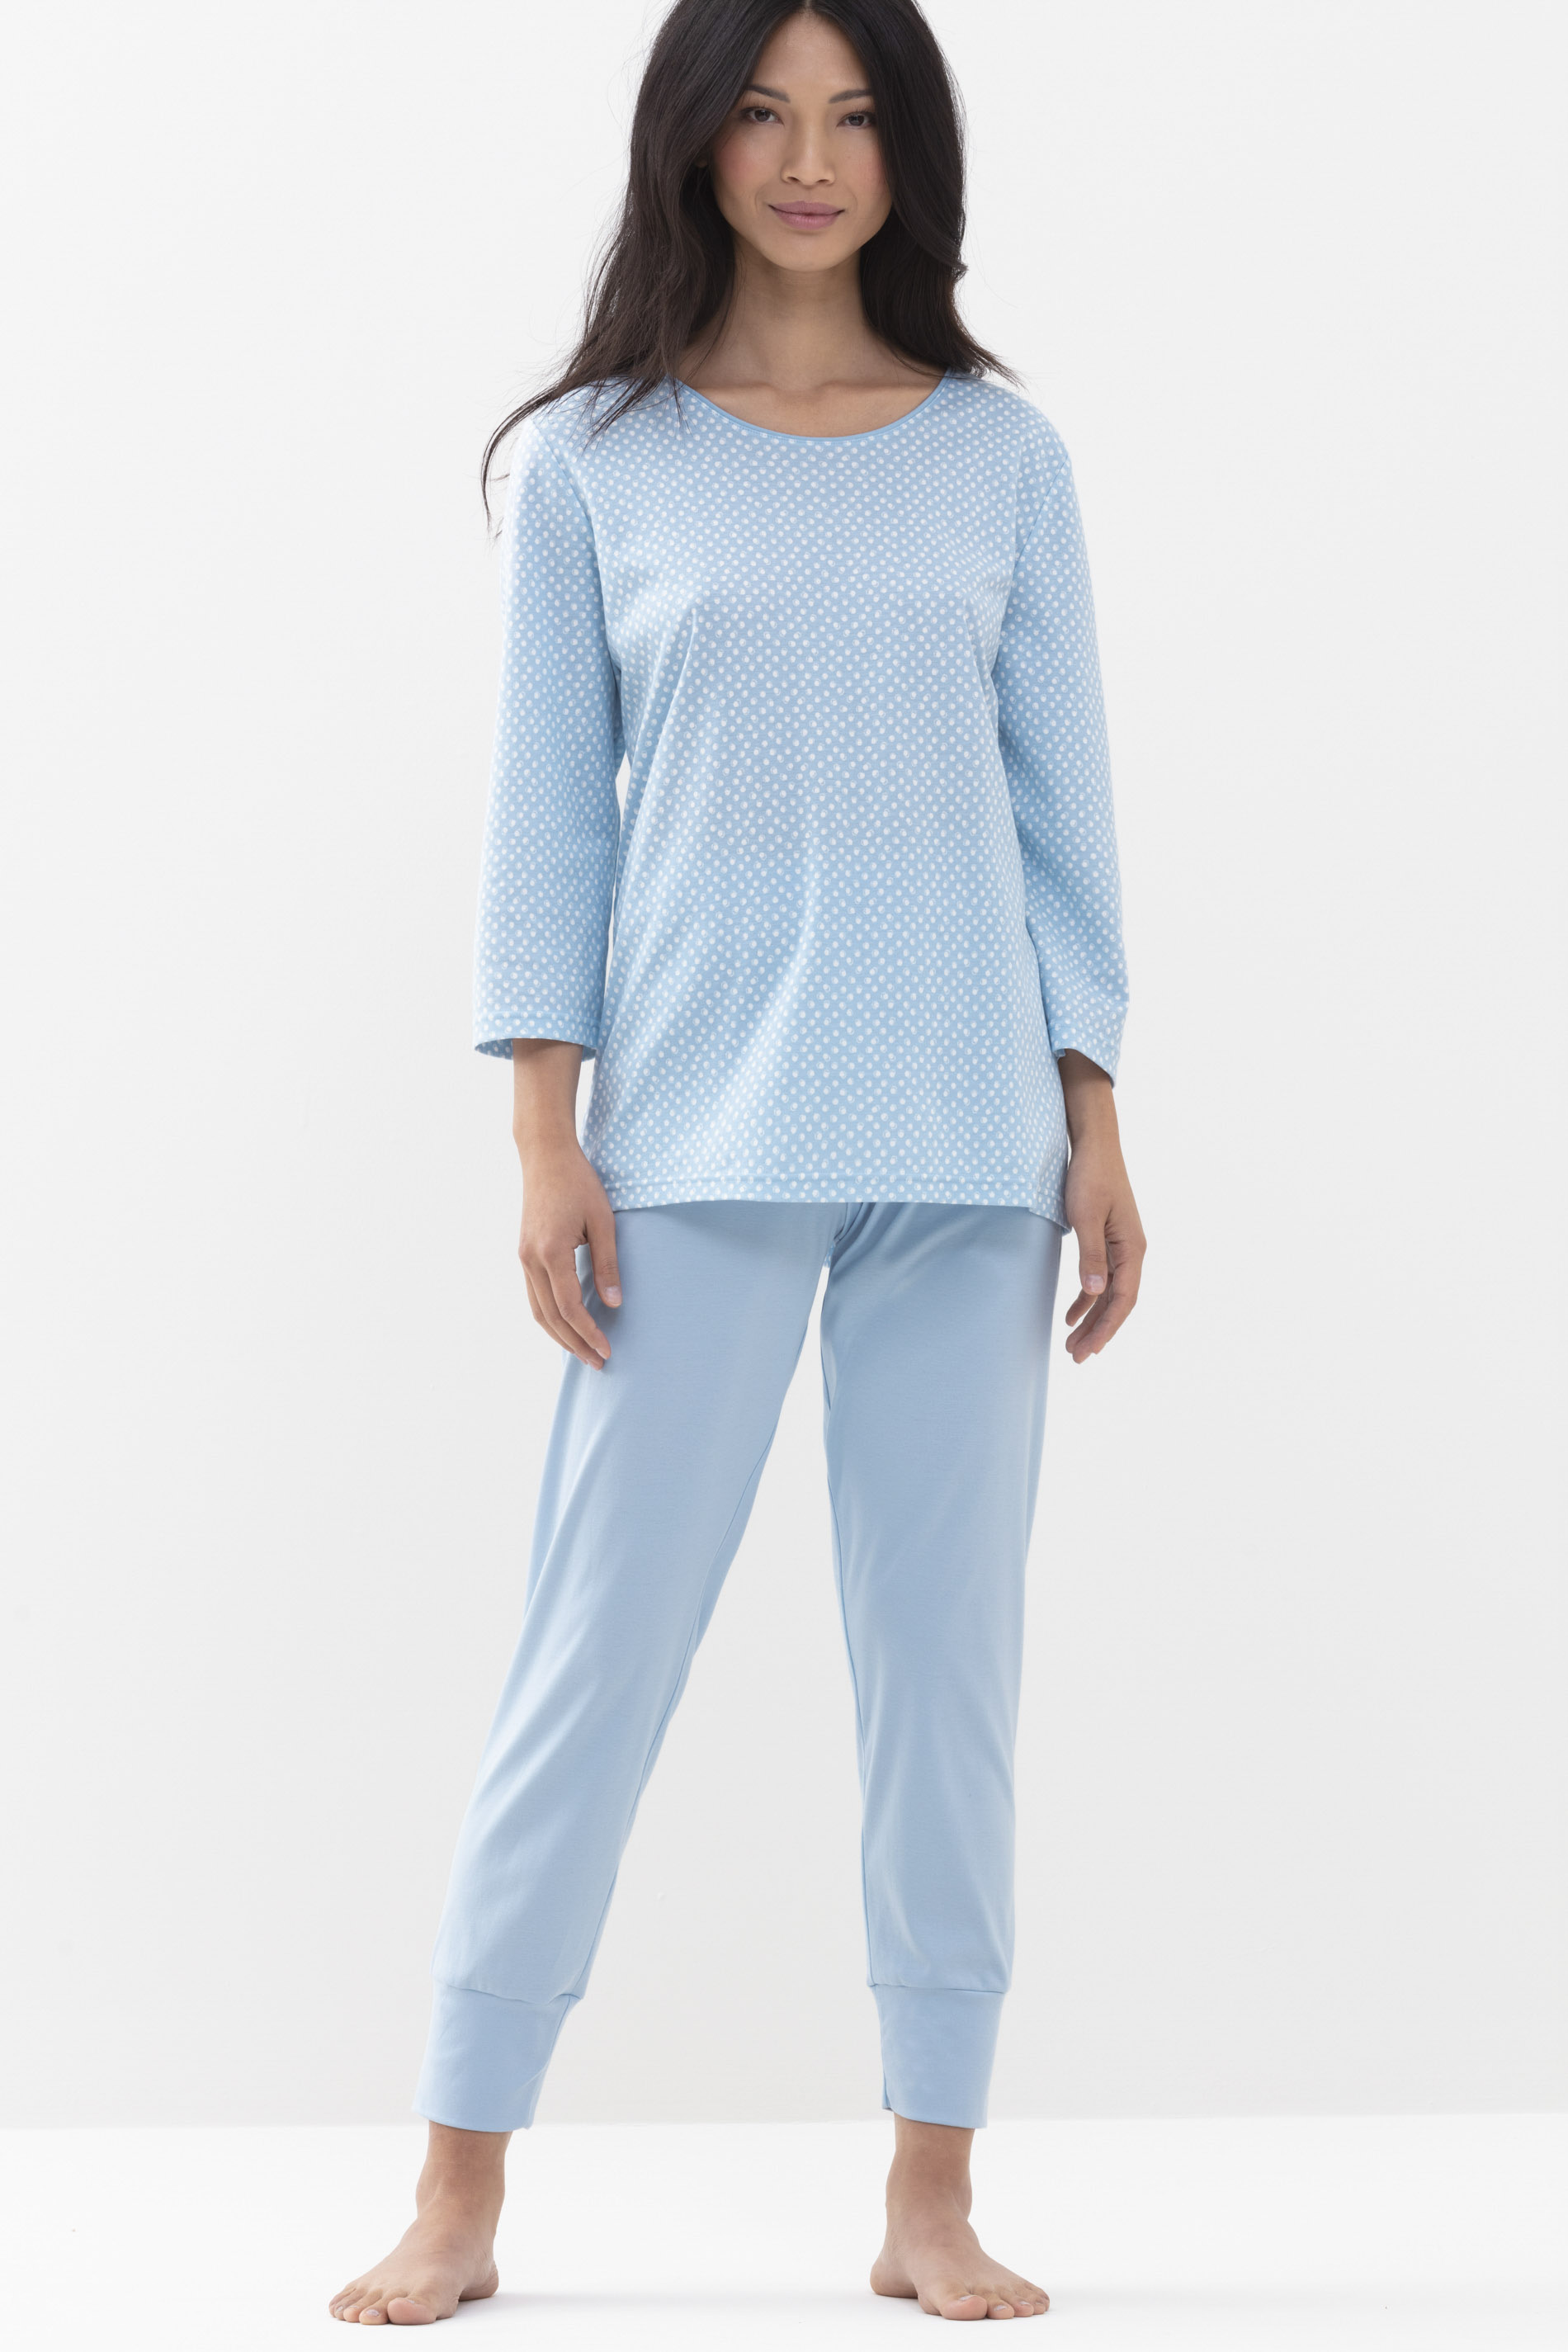 Cropped pyjamas Dream Blue Serie Emelie Front View | mey®